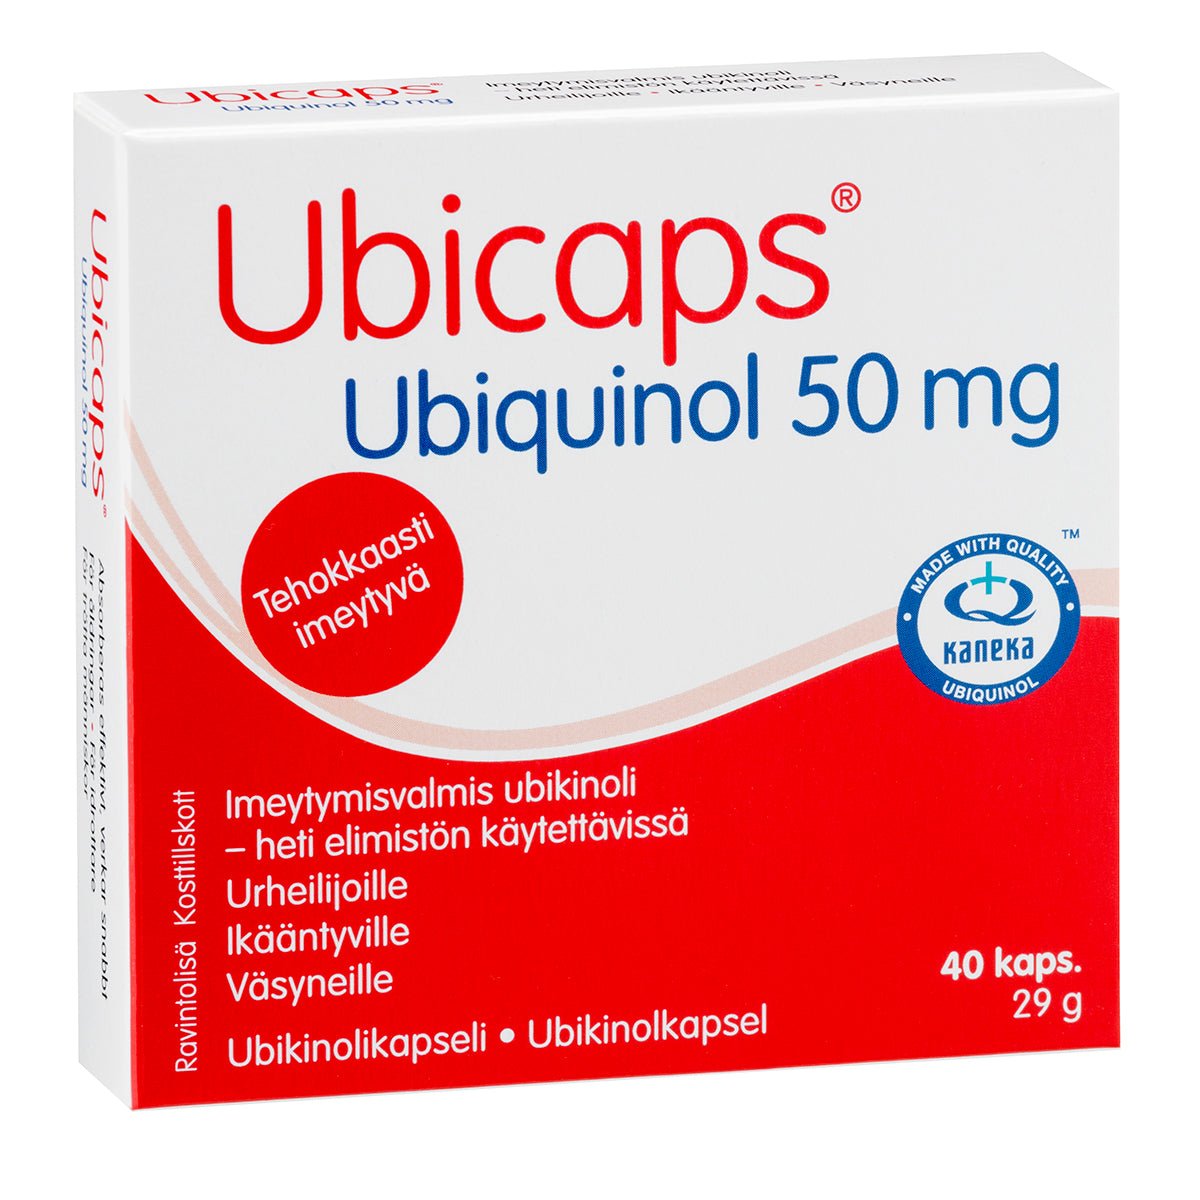 Hankintatukku Ubicaps Ubiquinol 50 mg, 40 kaps Päiväysale!.